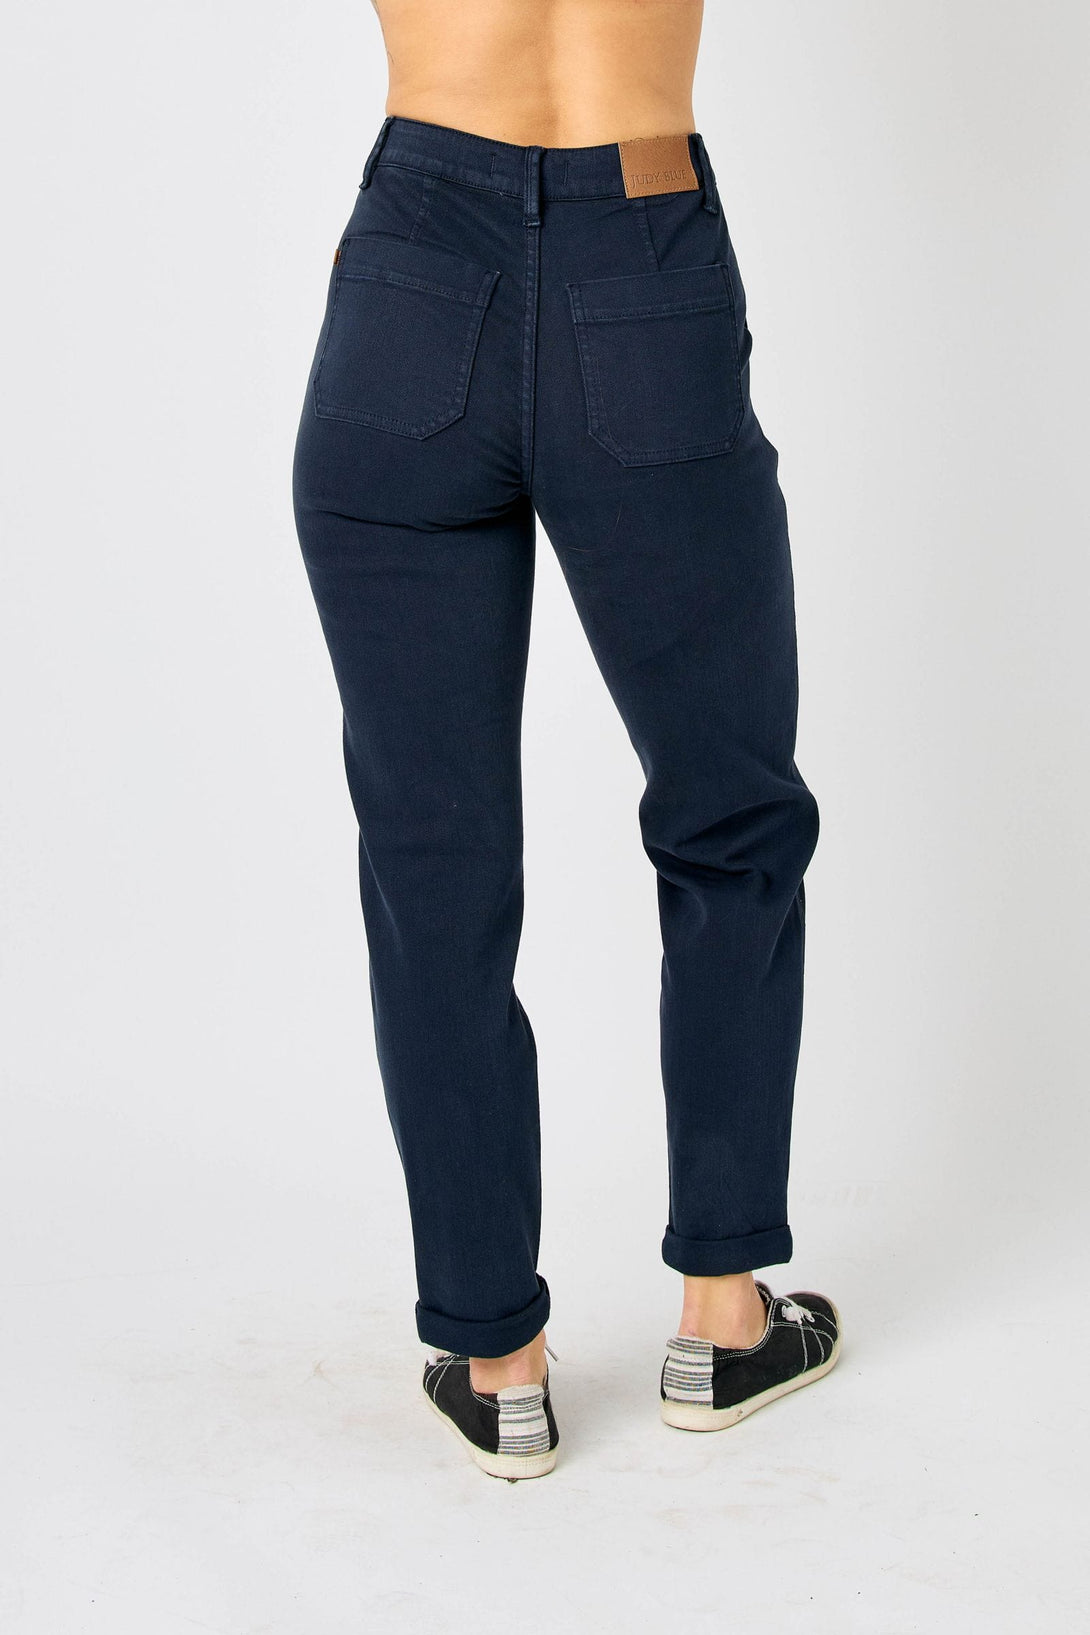 Judy Blue High Waist Garment Dyed Cuffed Jogger Style Jeans